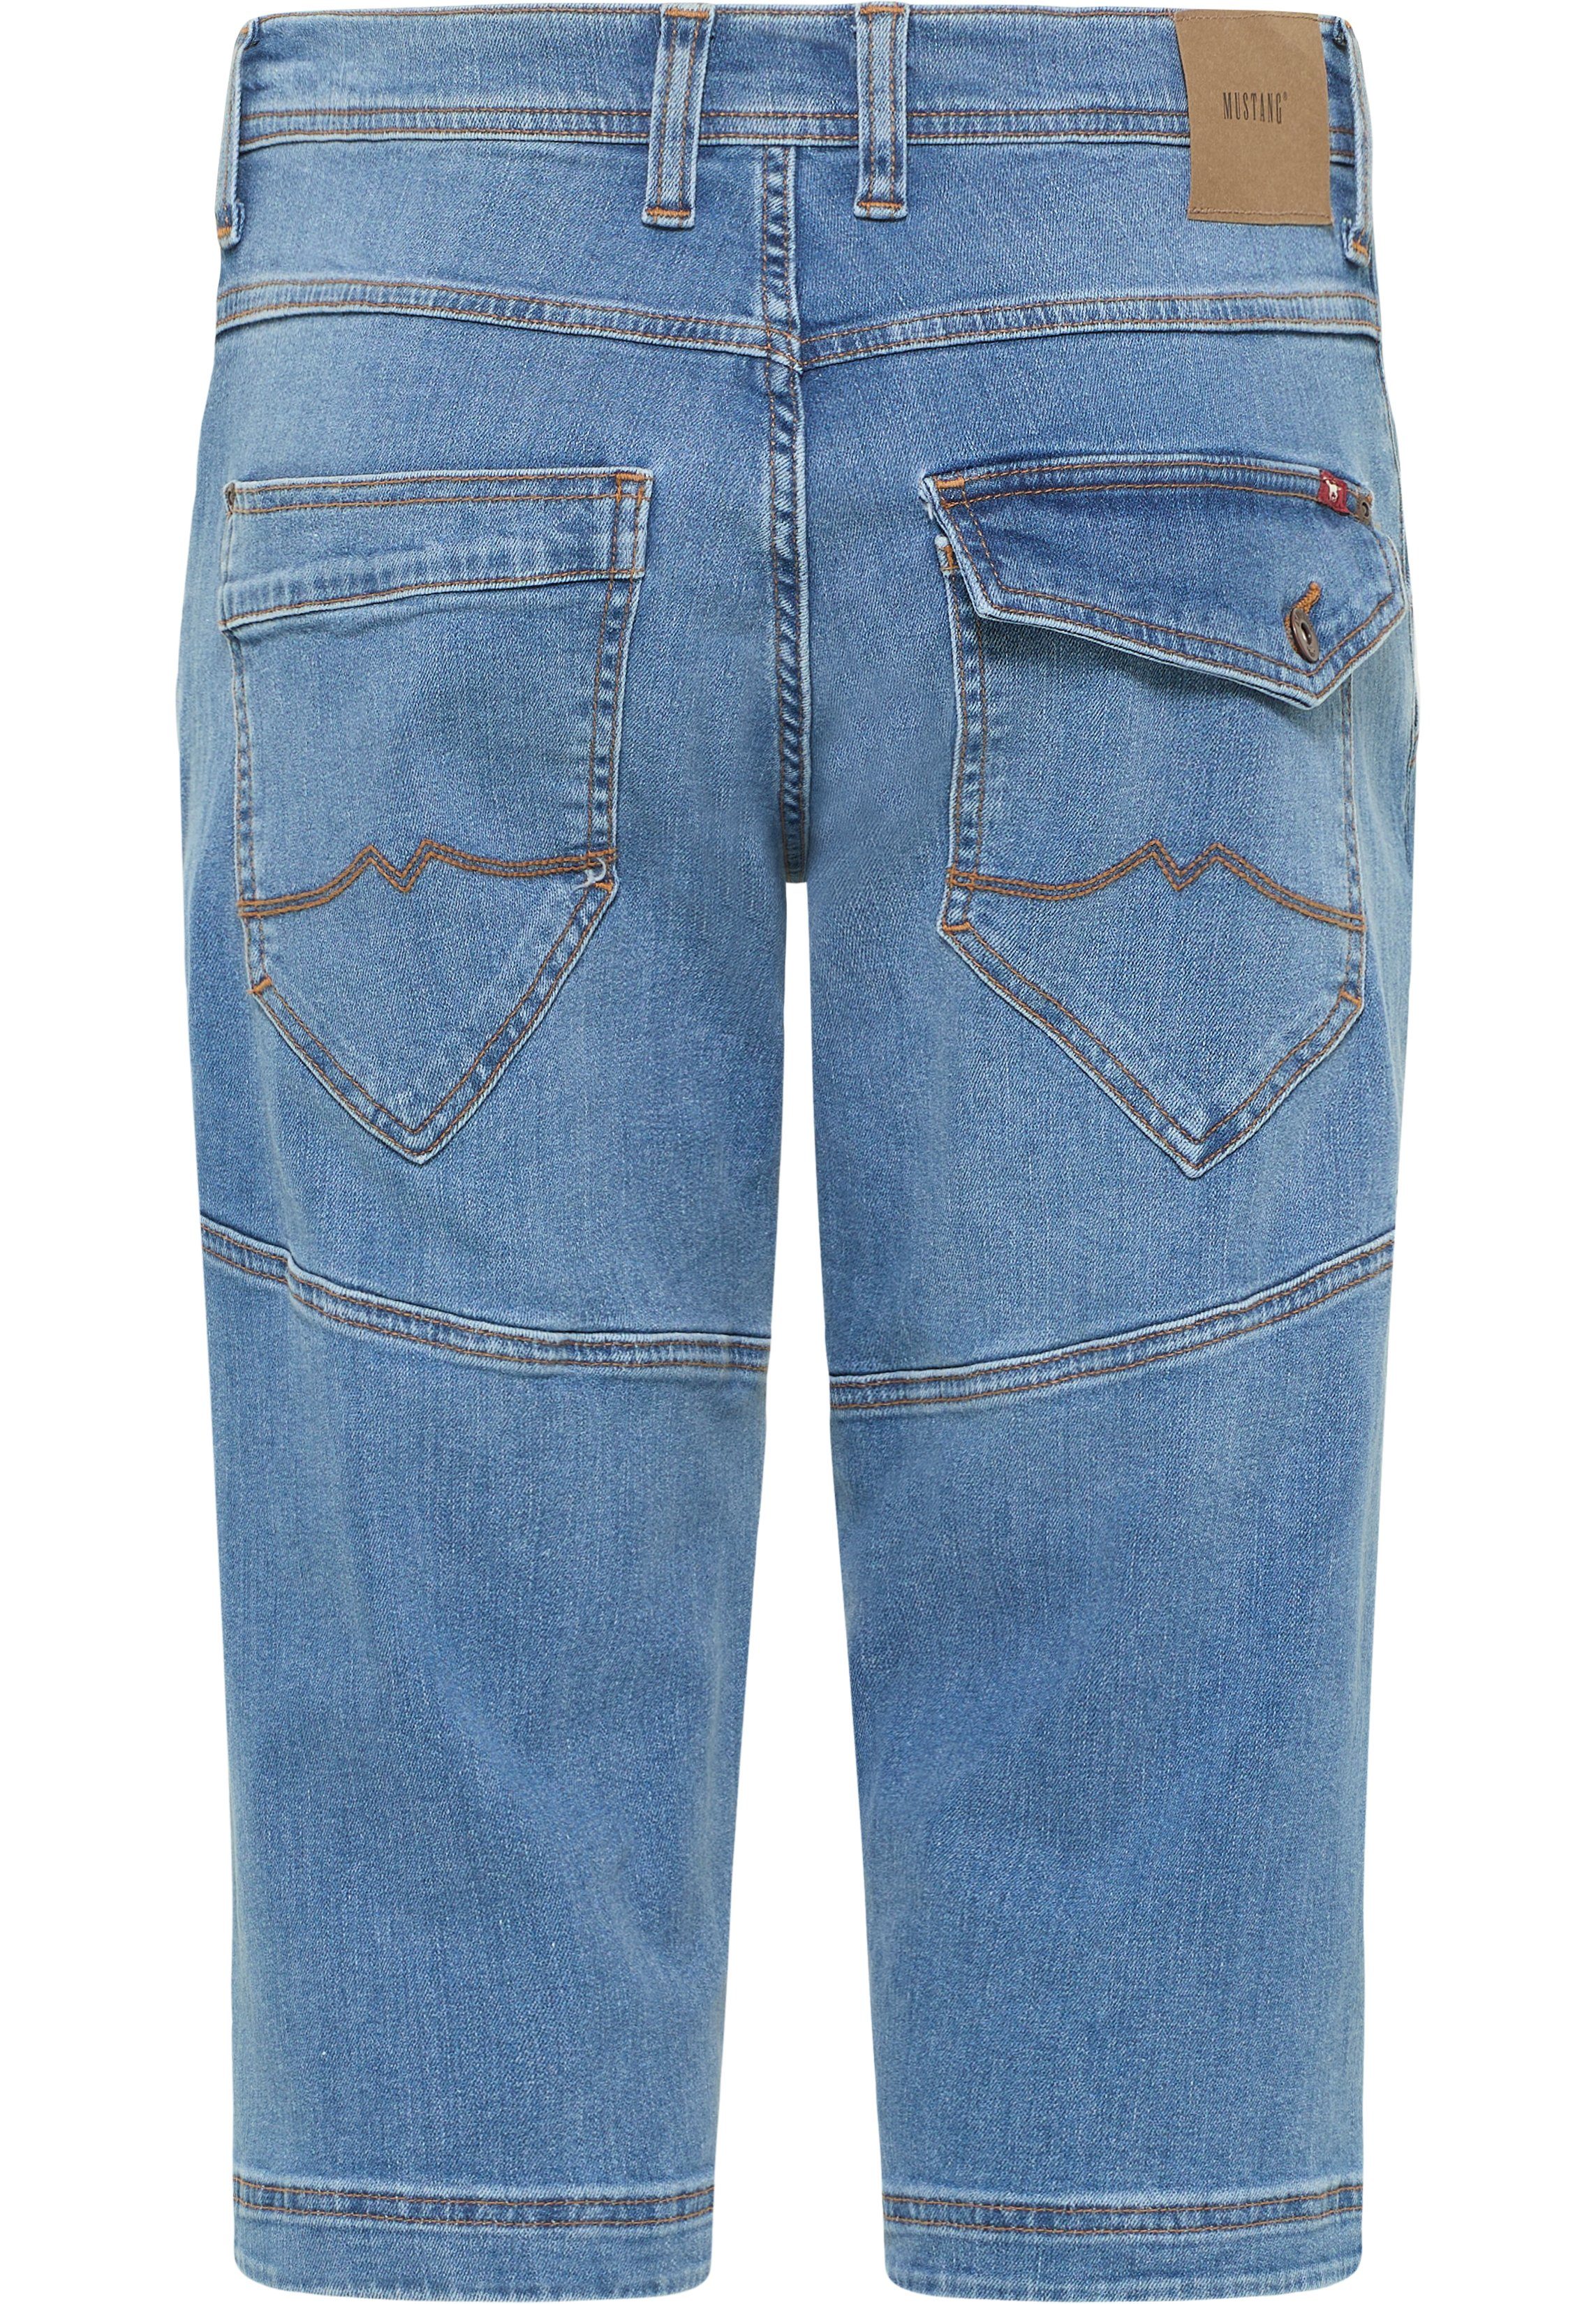 Style Jeansshorts Shorts blau-5000583 Fremont MUSTANG